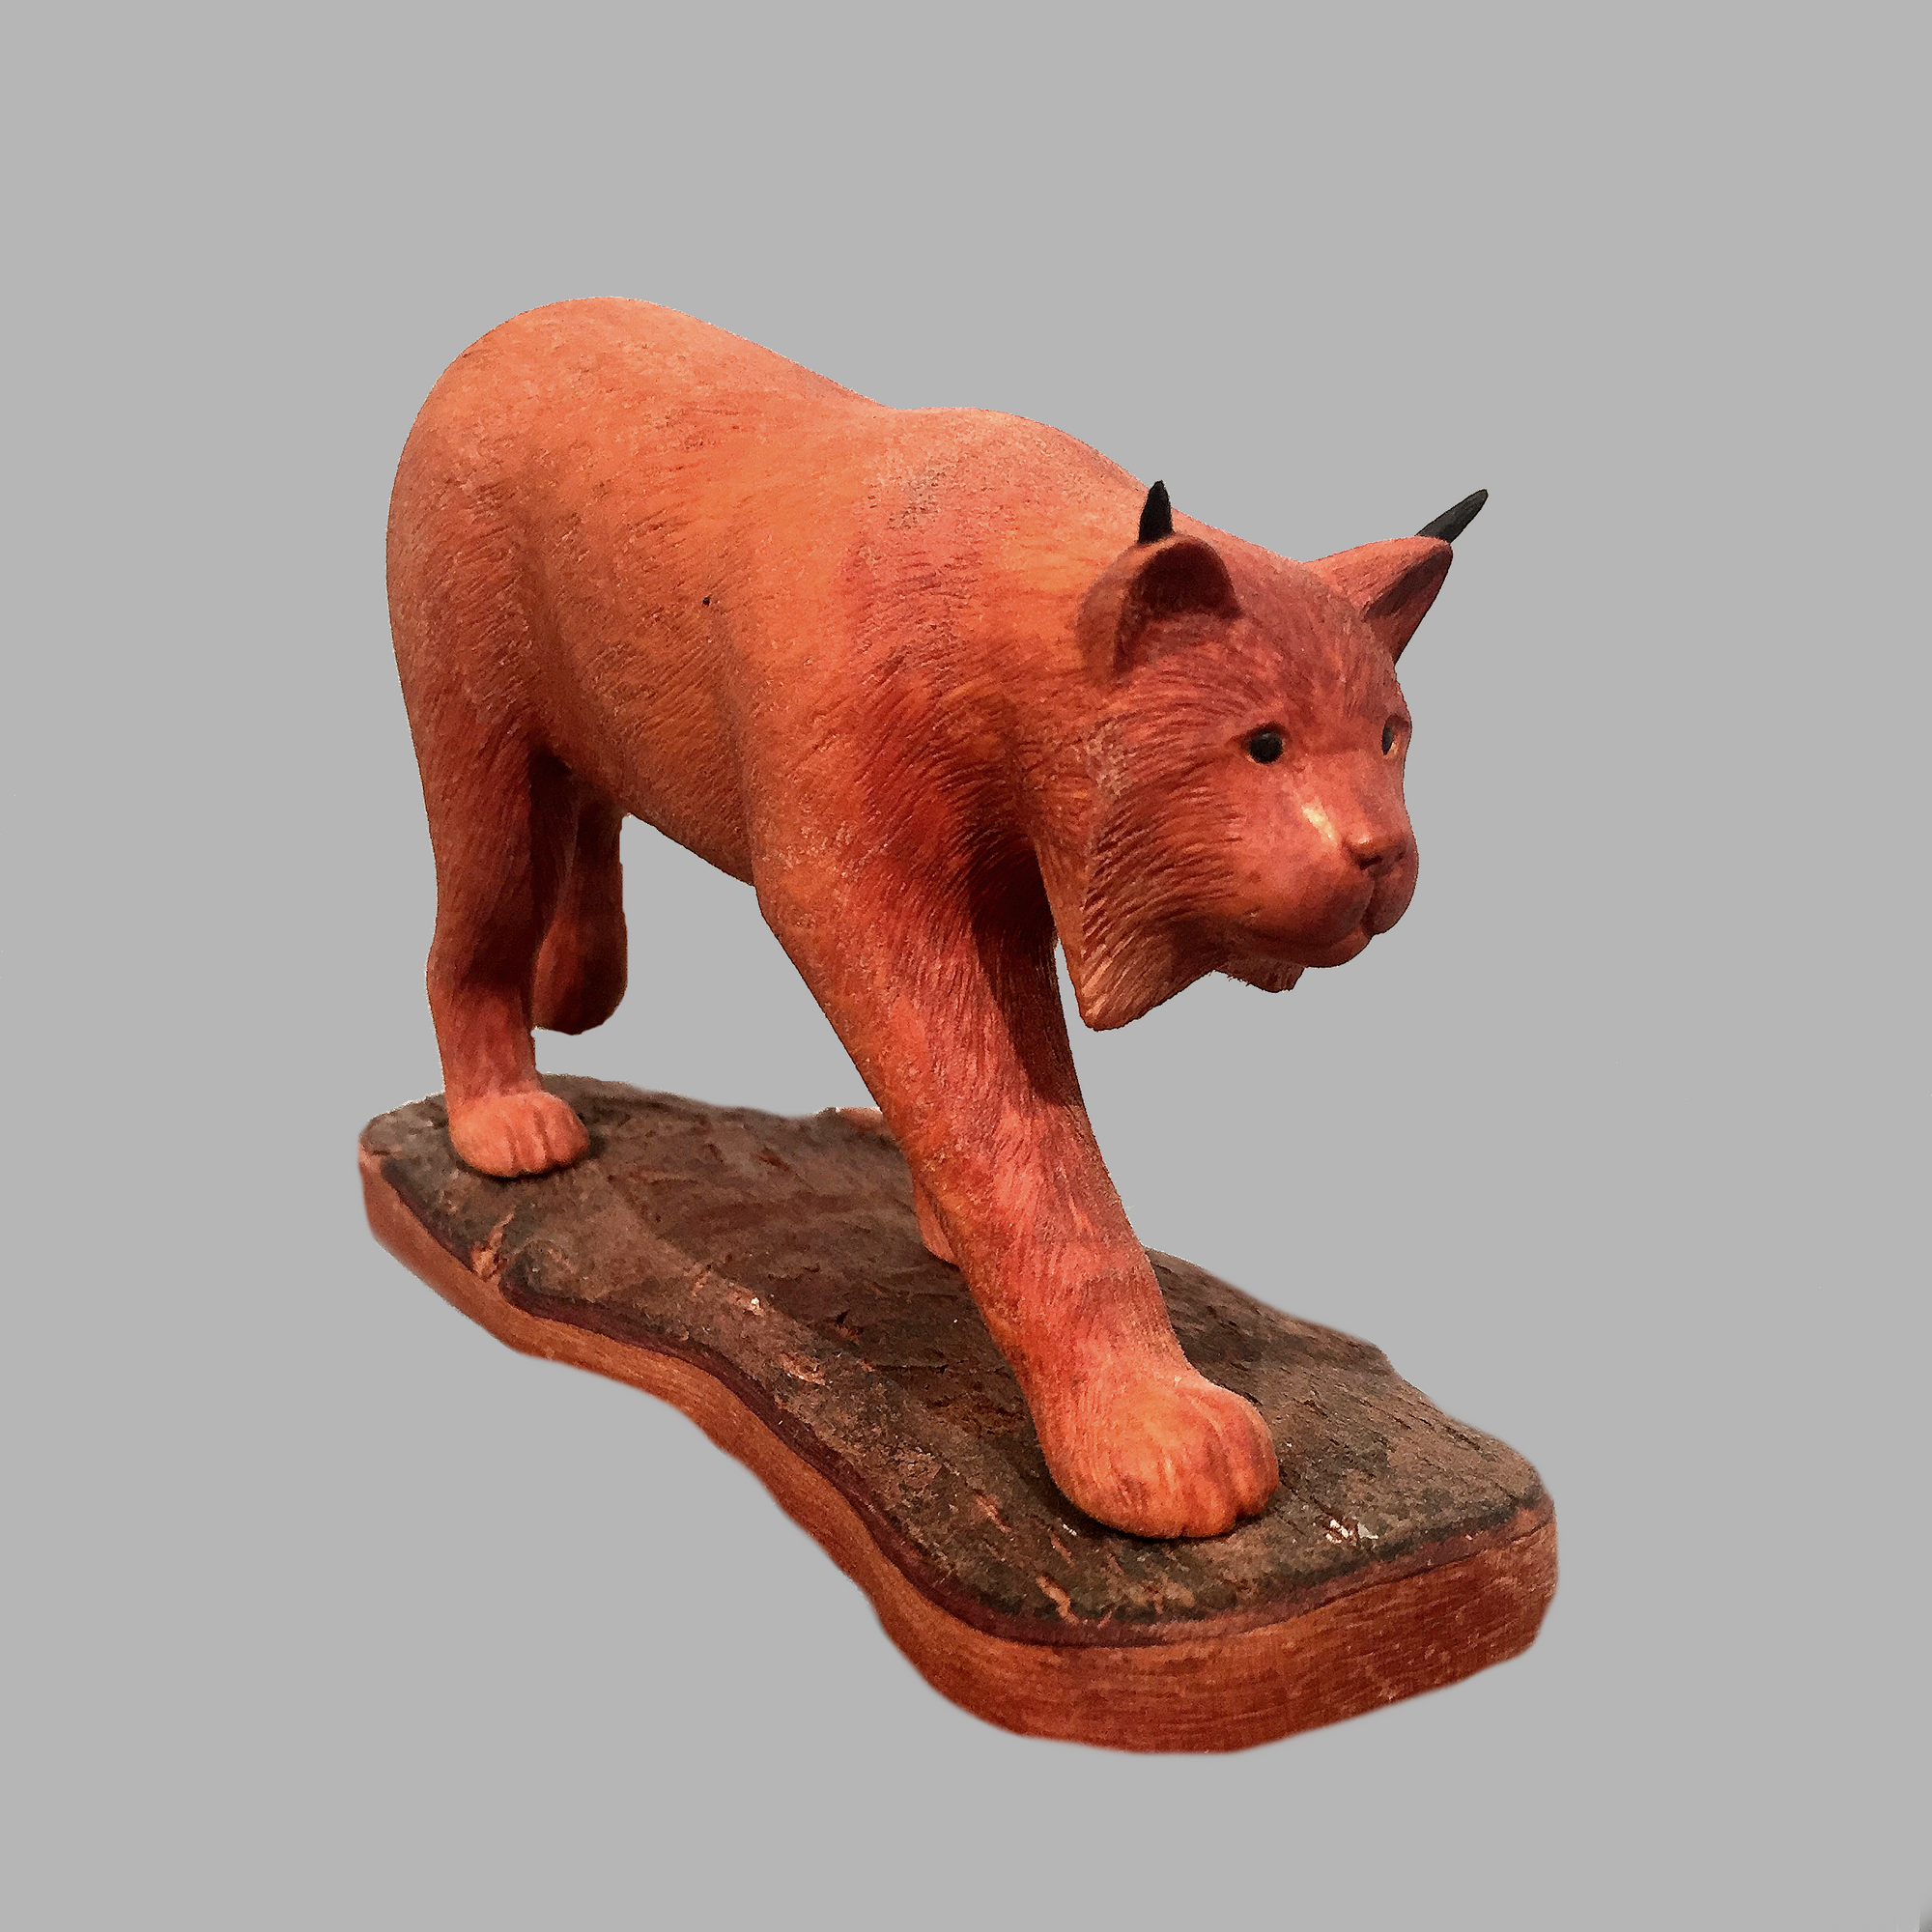 Linx Minature Animal wood carving by Salt Spring Island artist Jim Dearing